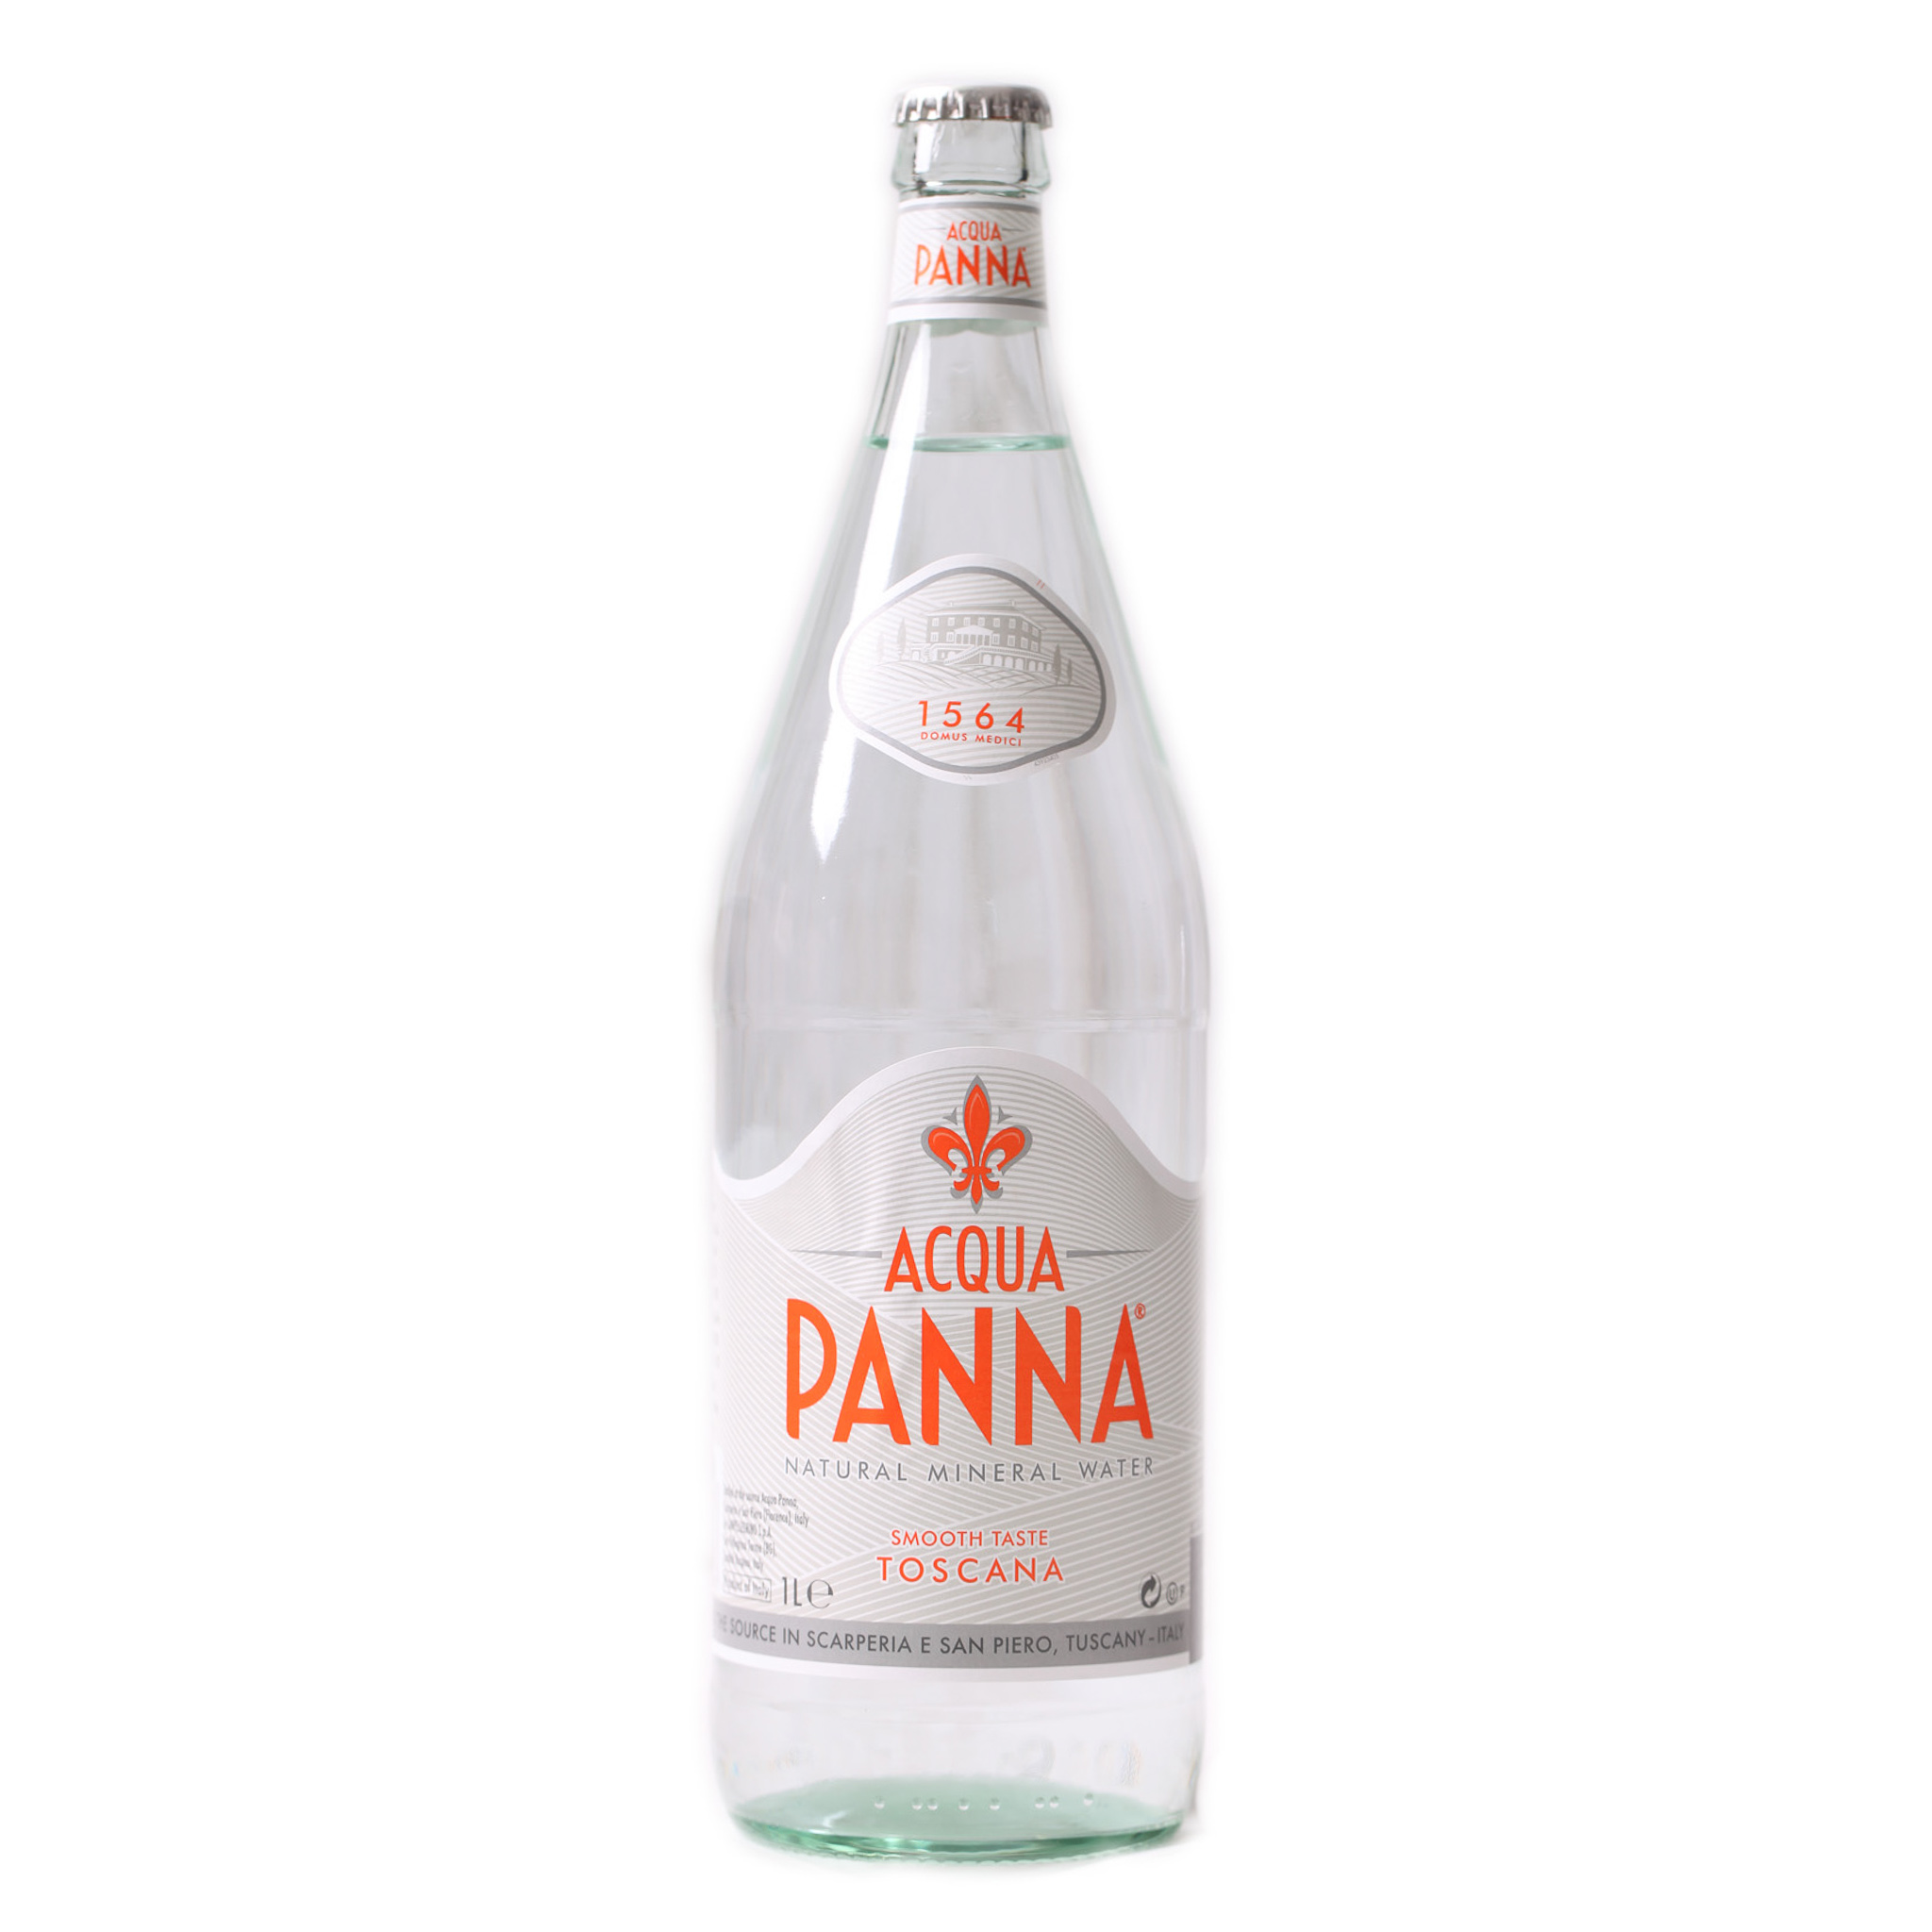 Aqua Panna still water